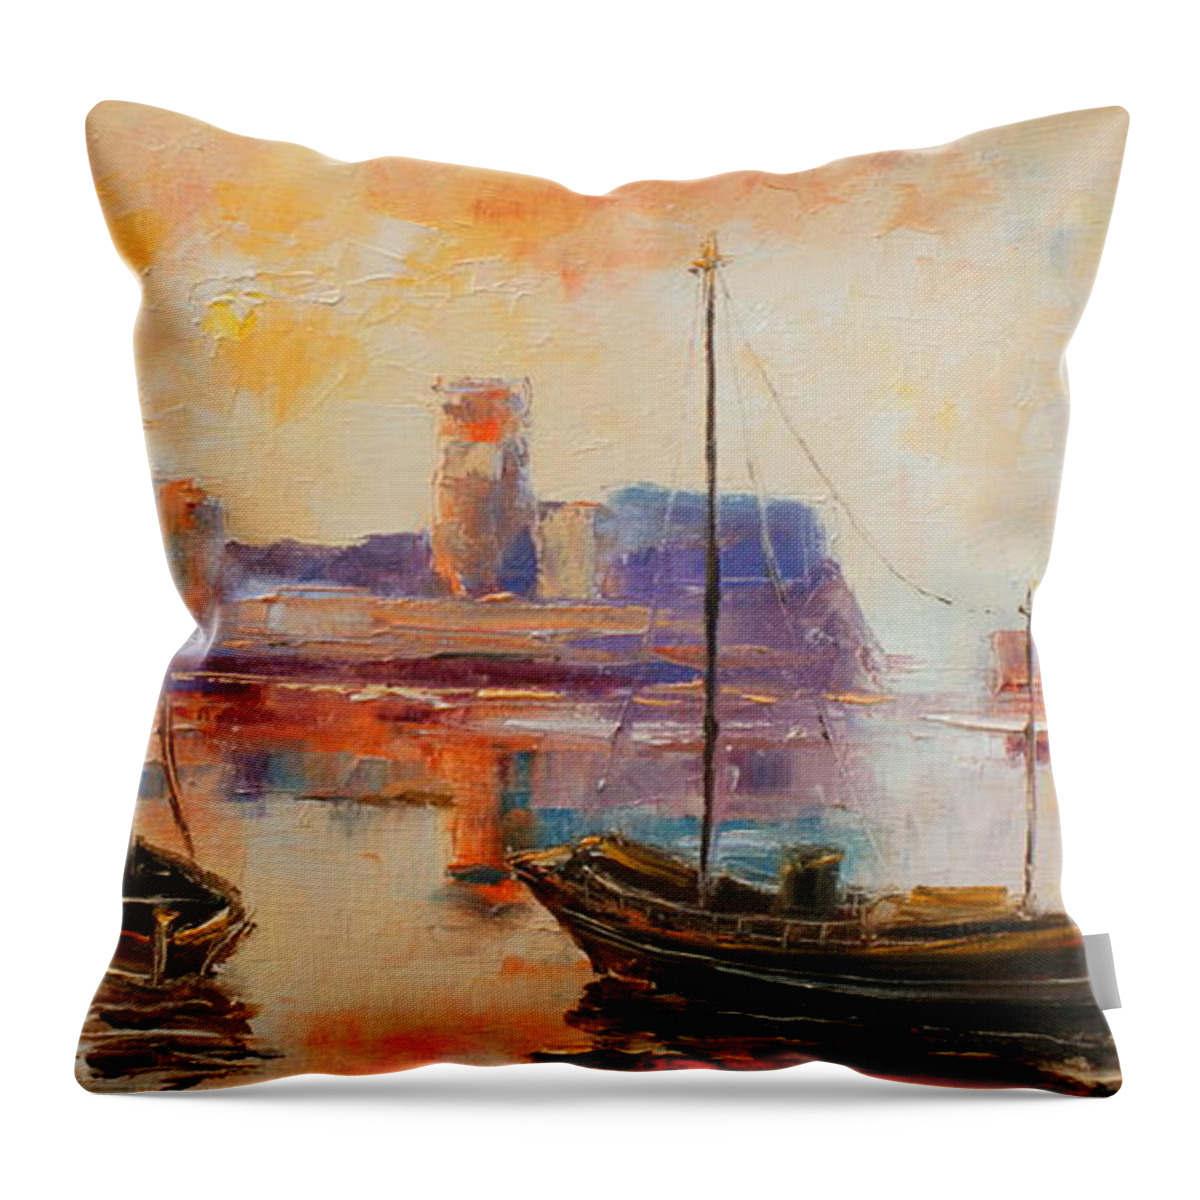 Dunbar Throw Pillow featuring the painting Old Dunbar harbour by Luke Karcz